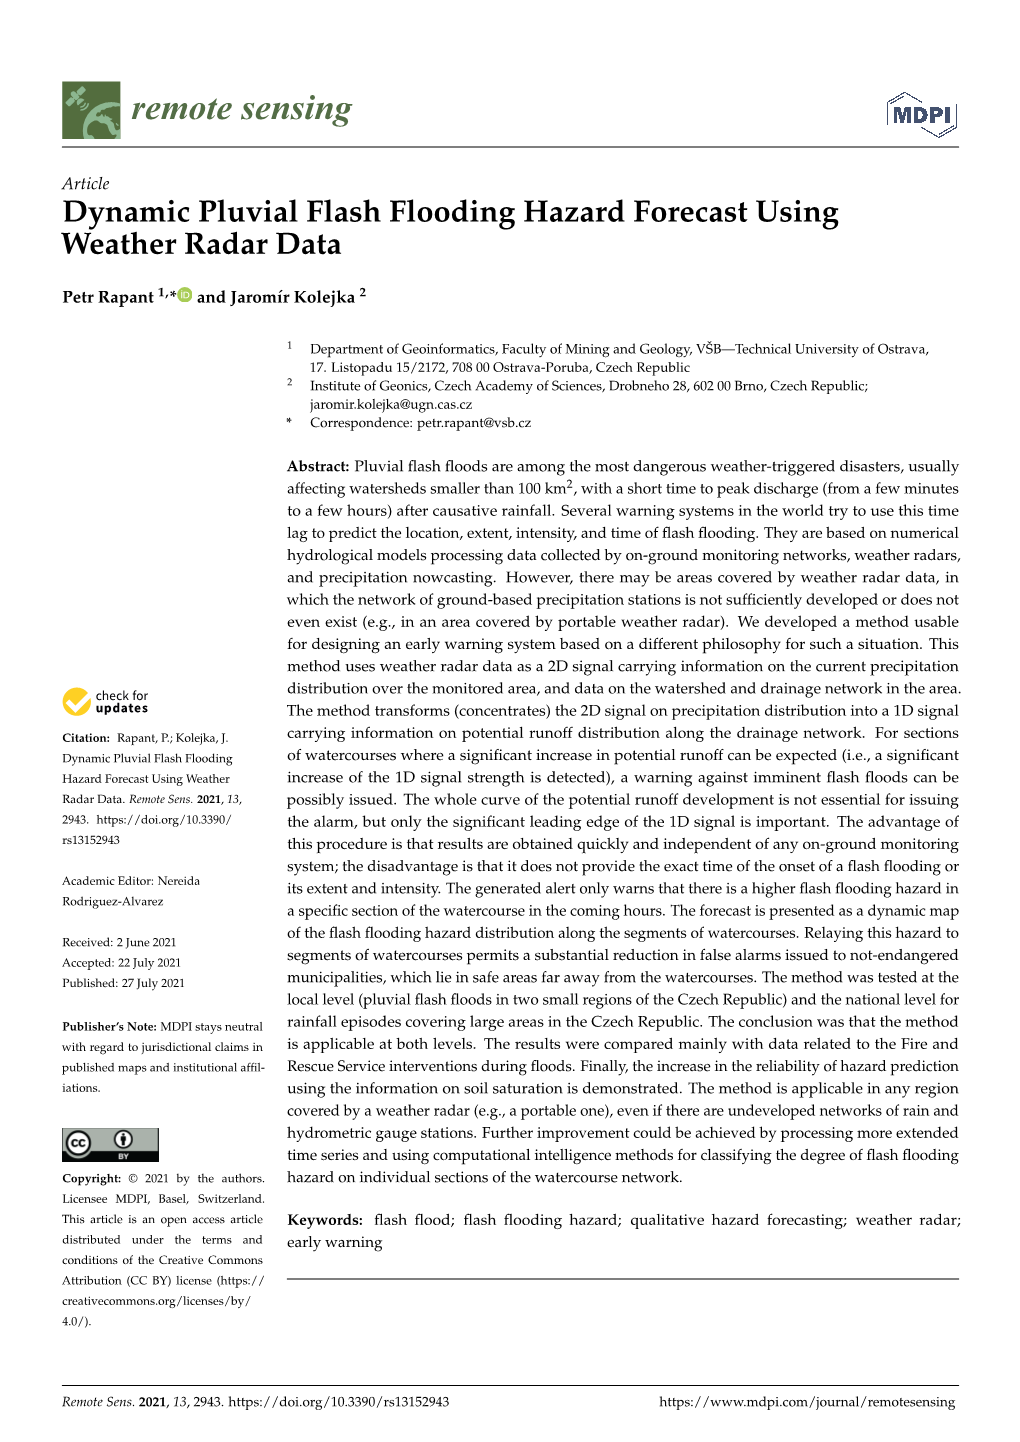 Dynamic Pluvial Flash Flooding Hazard Forecast Using Weather Radar Data